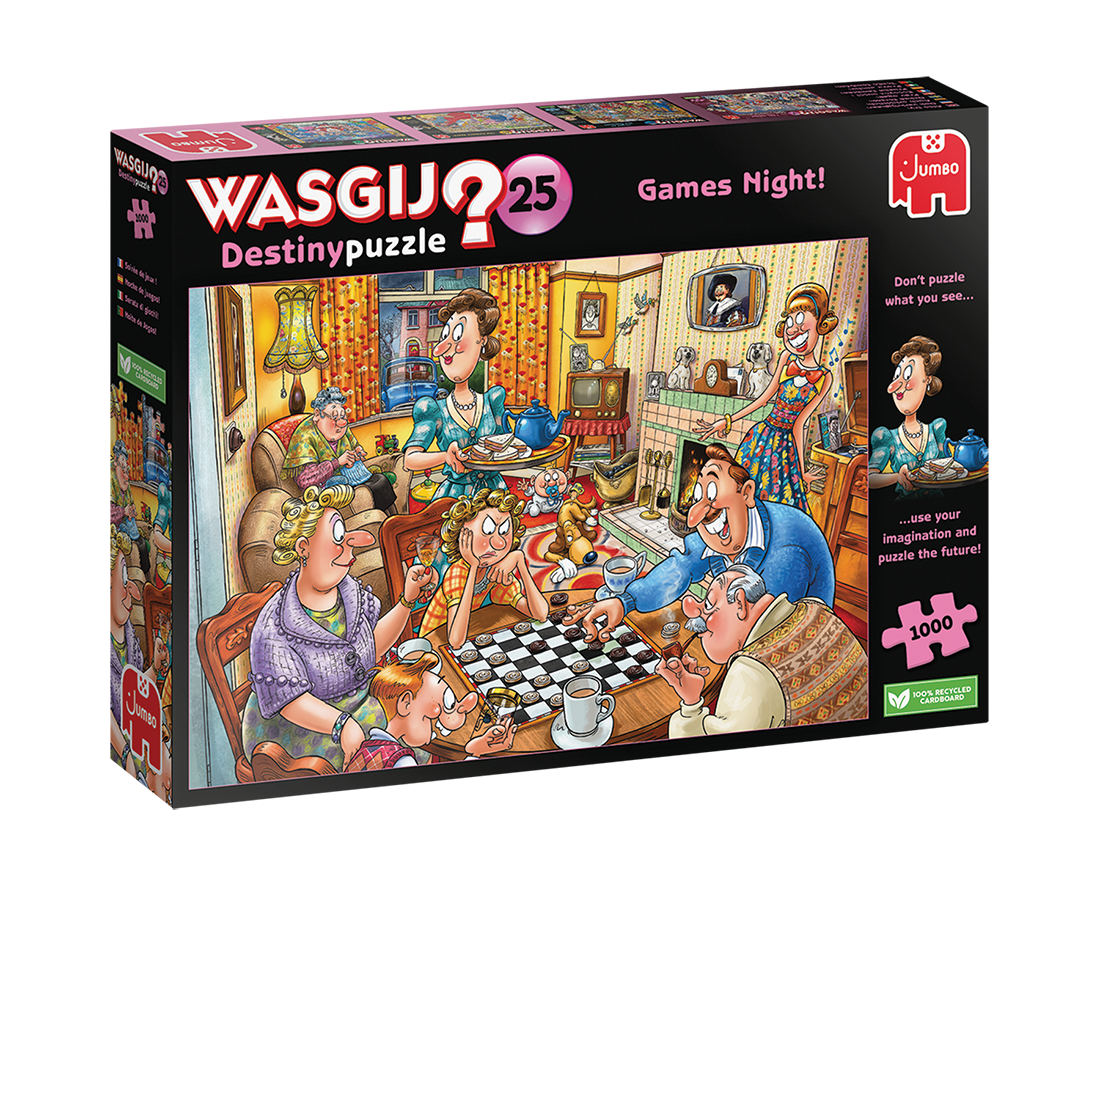 Wasgij Destiny 25 Games Night 1000pcs - product image - Jumboplay.com